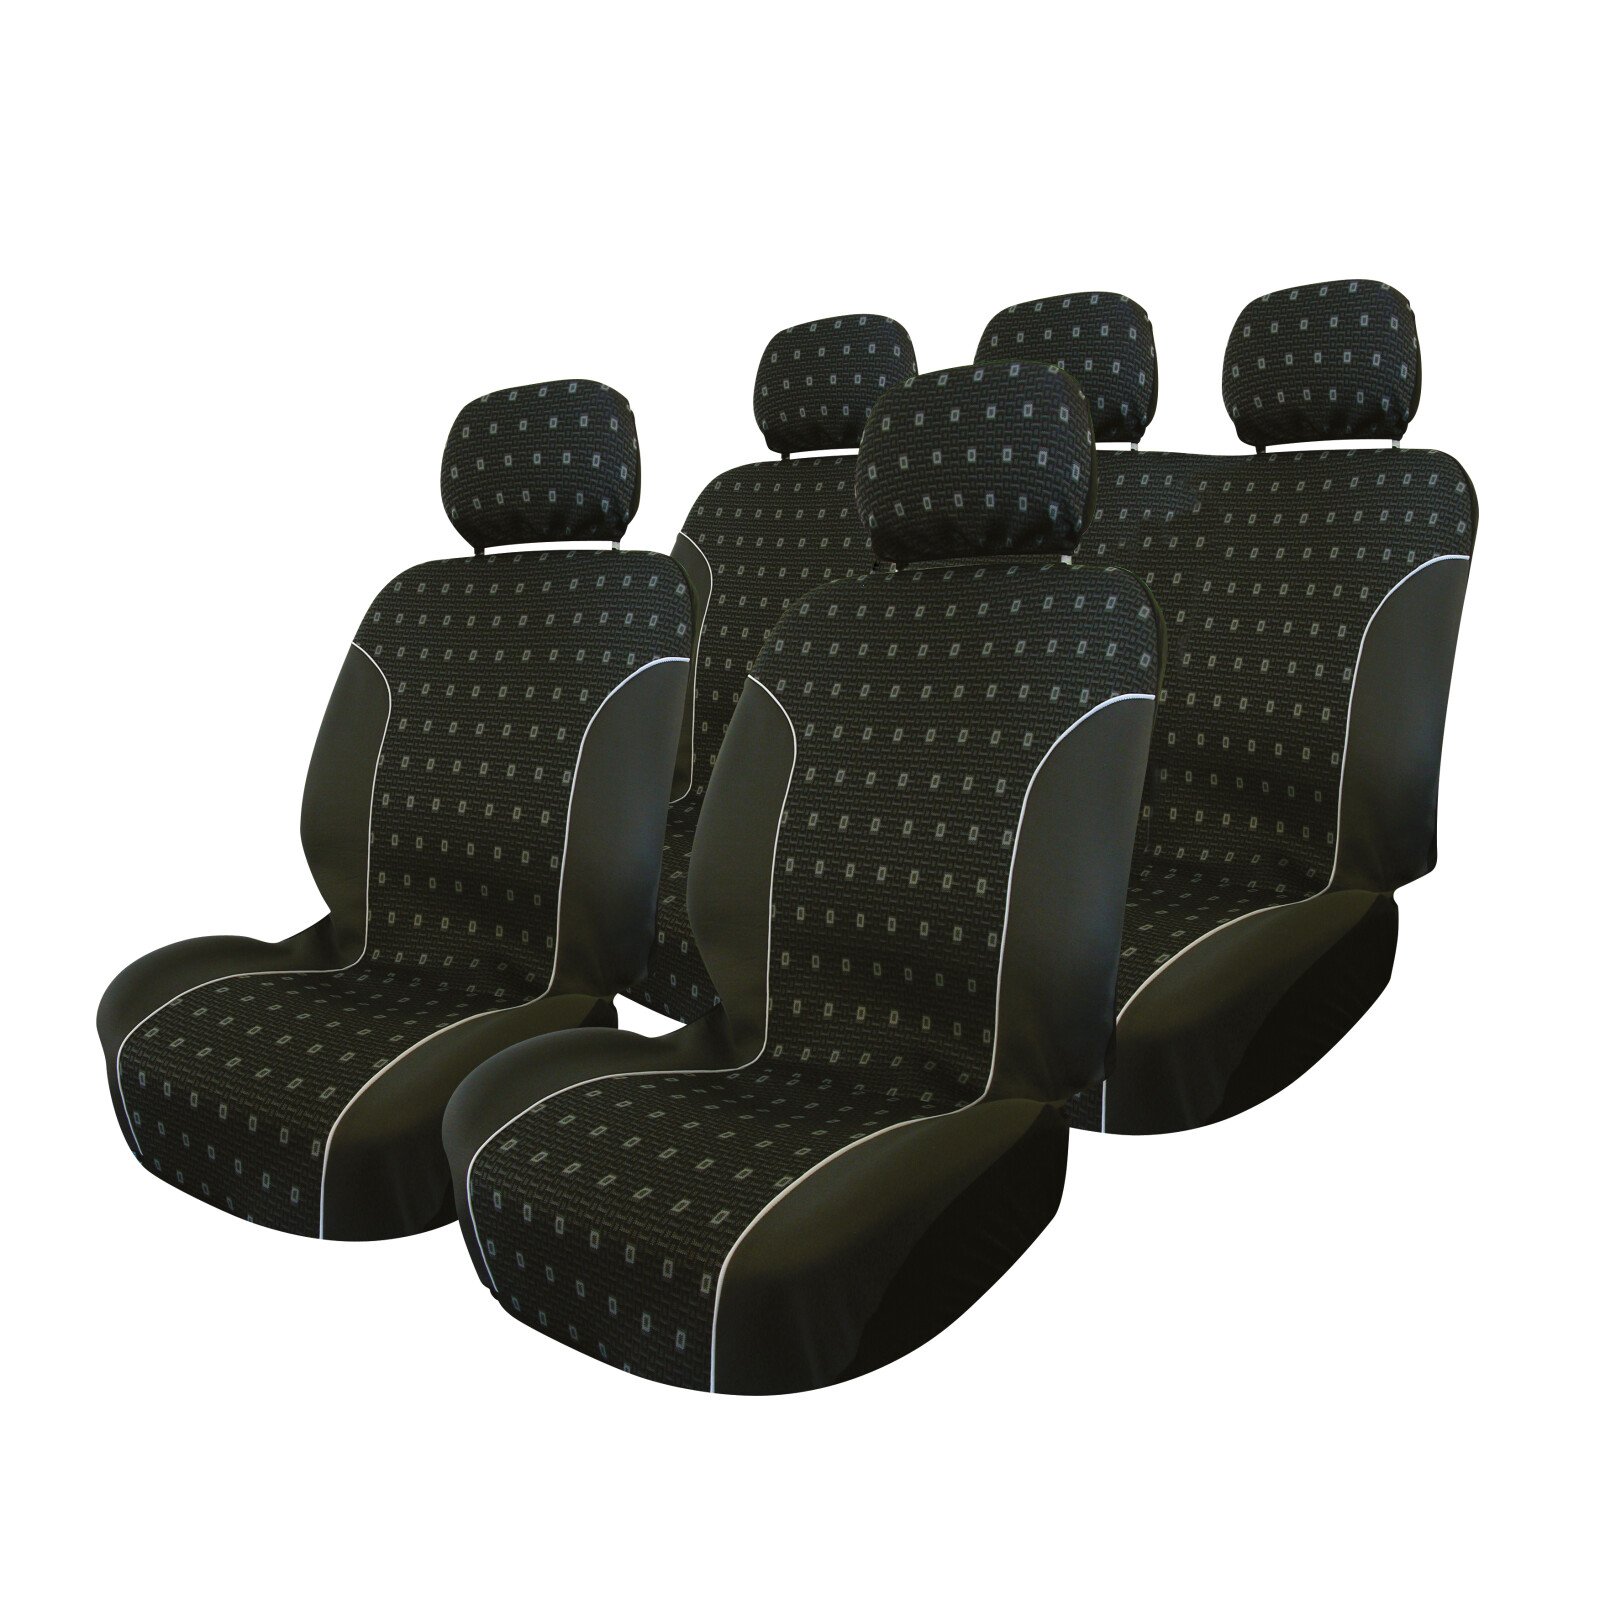 Charcoal seat covers 9pcs - Black thumb